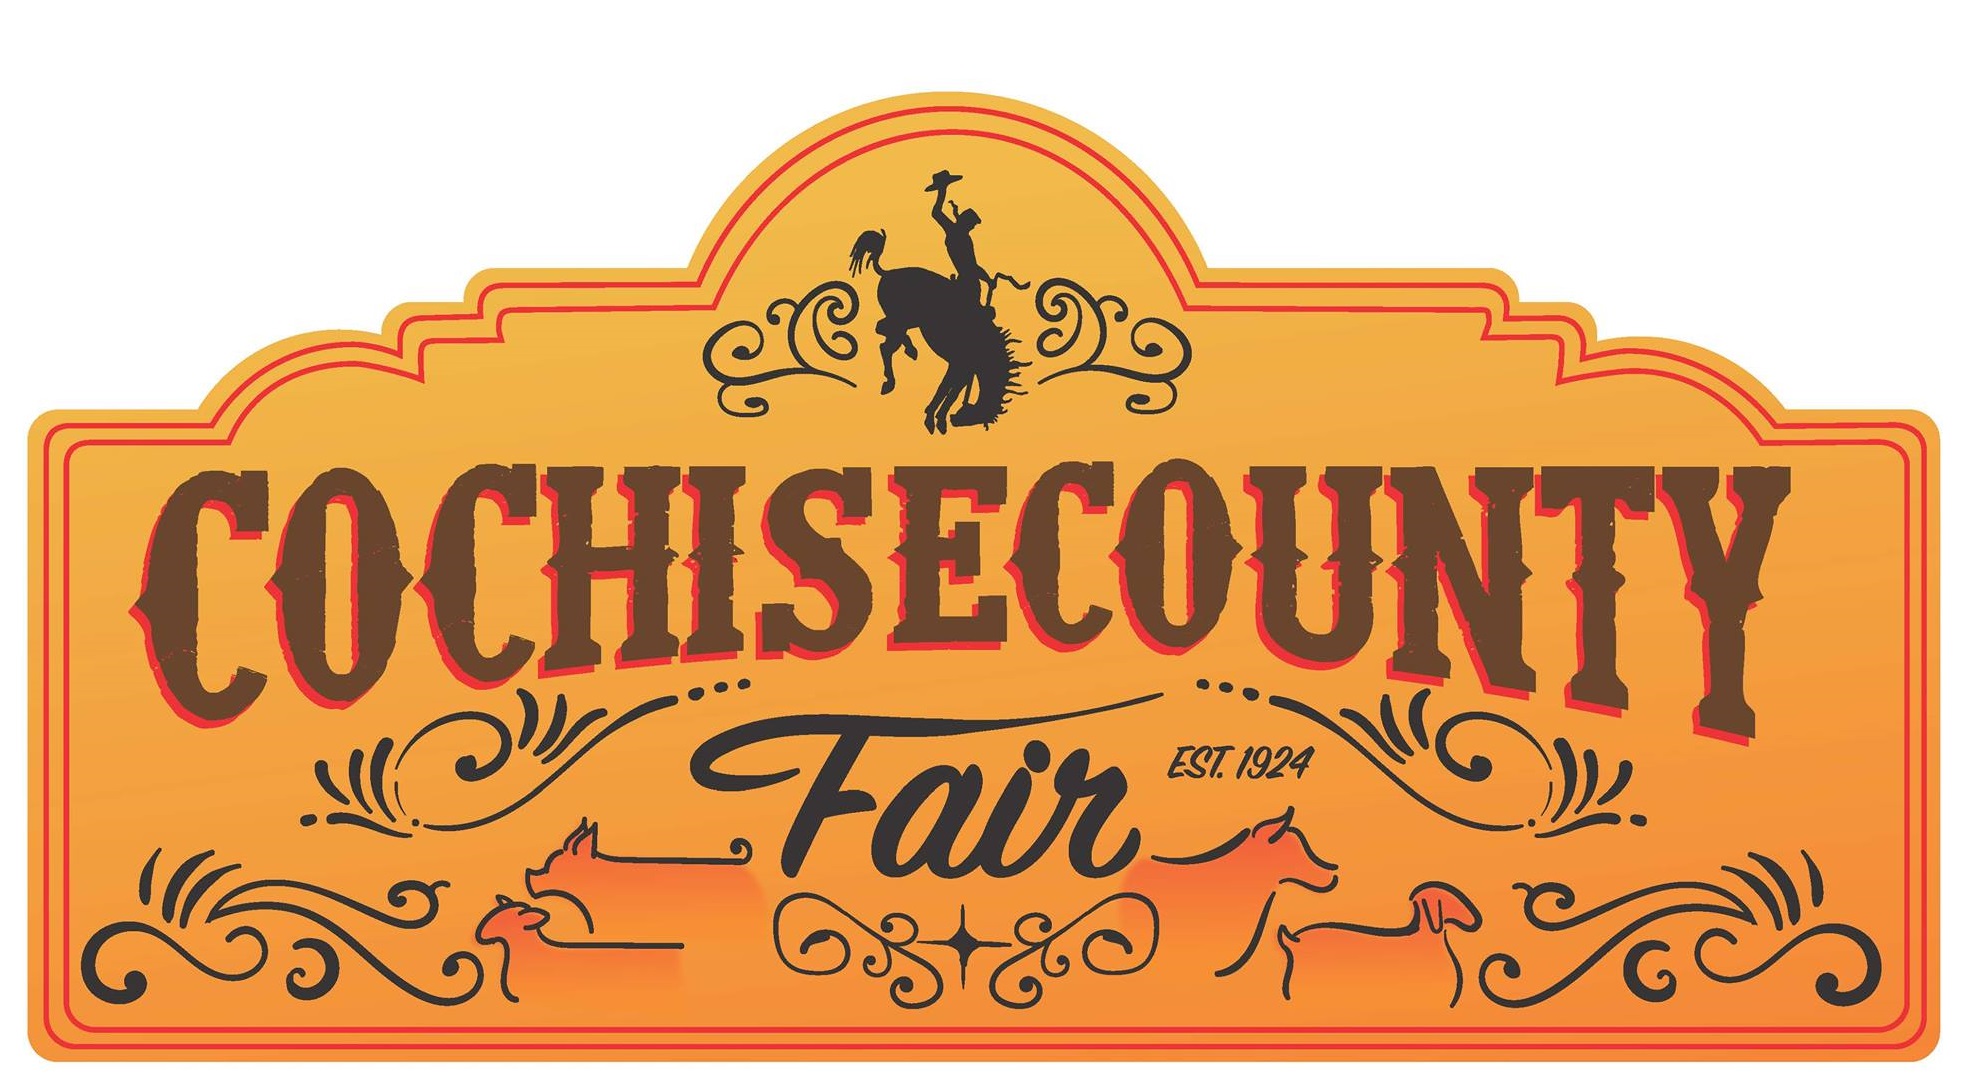 Cochise County Fair Assn